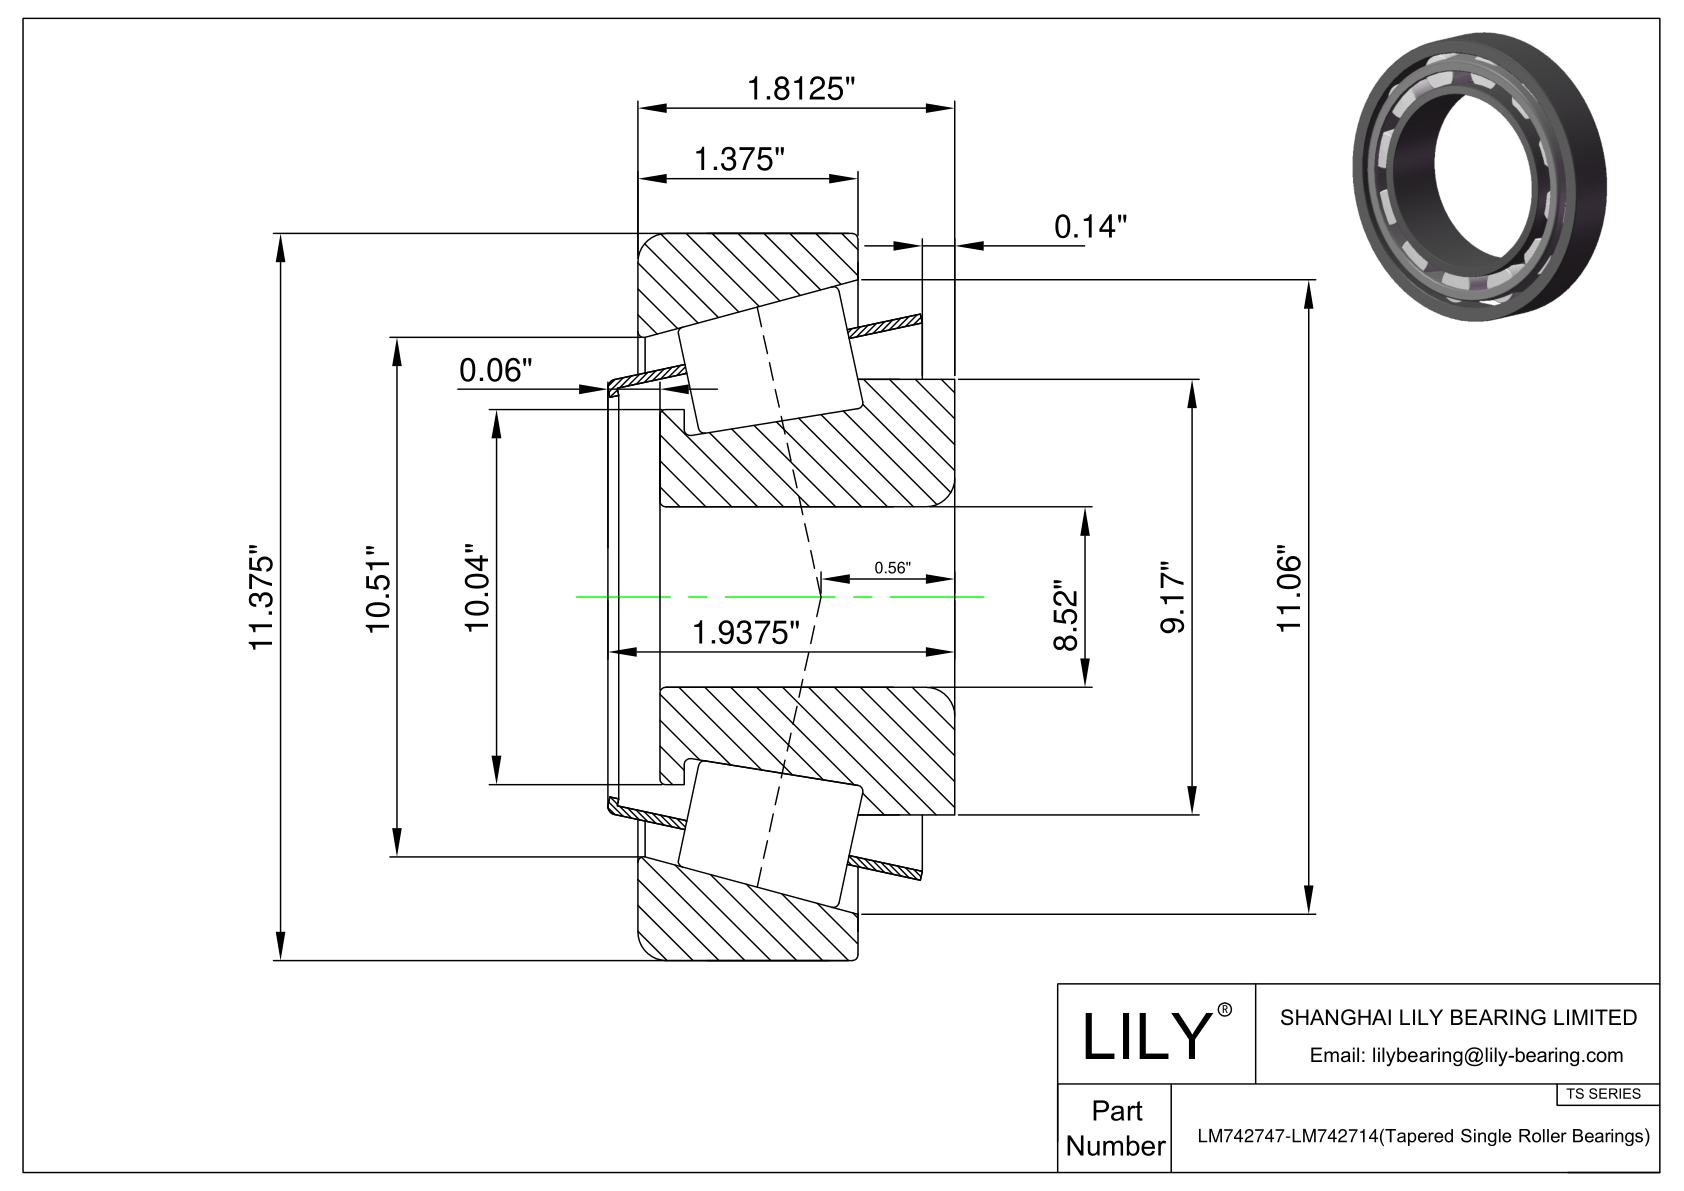 LM742747-LM742714 TS系列(圆锥单滚子轴承)(英制) CAD图形